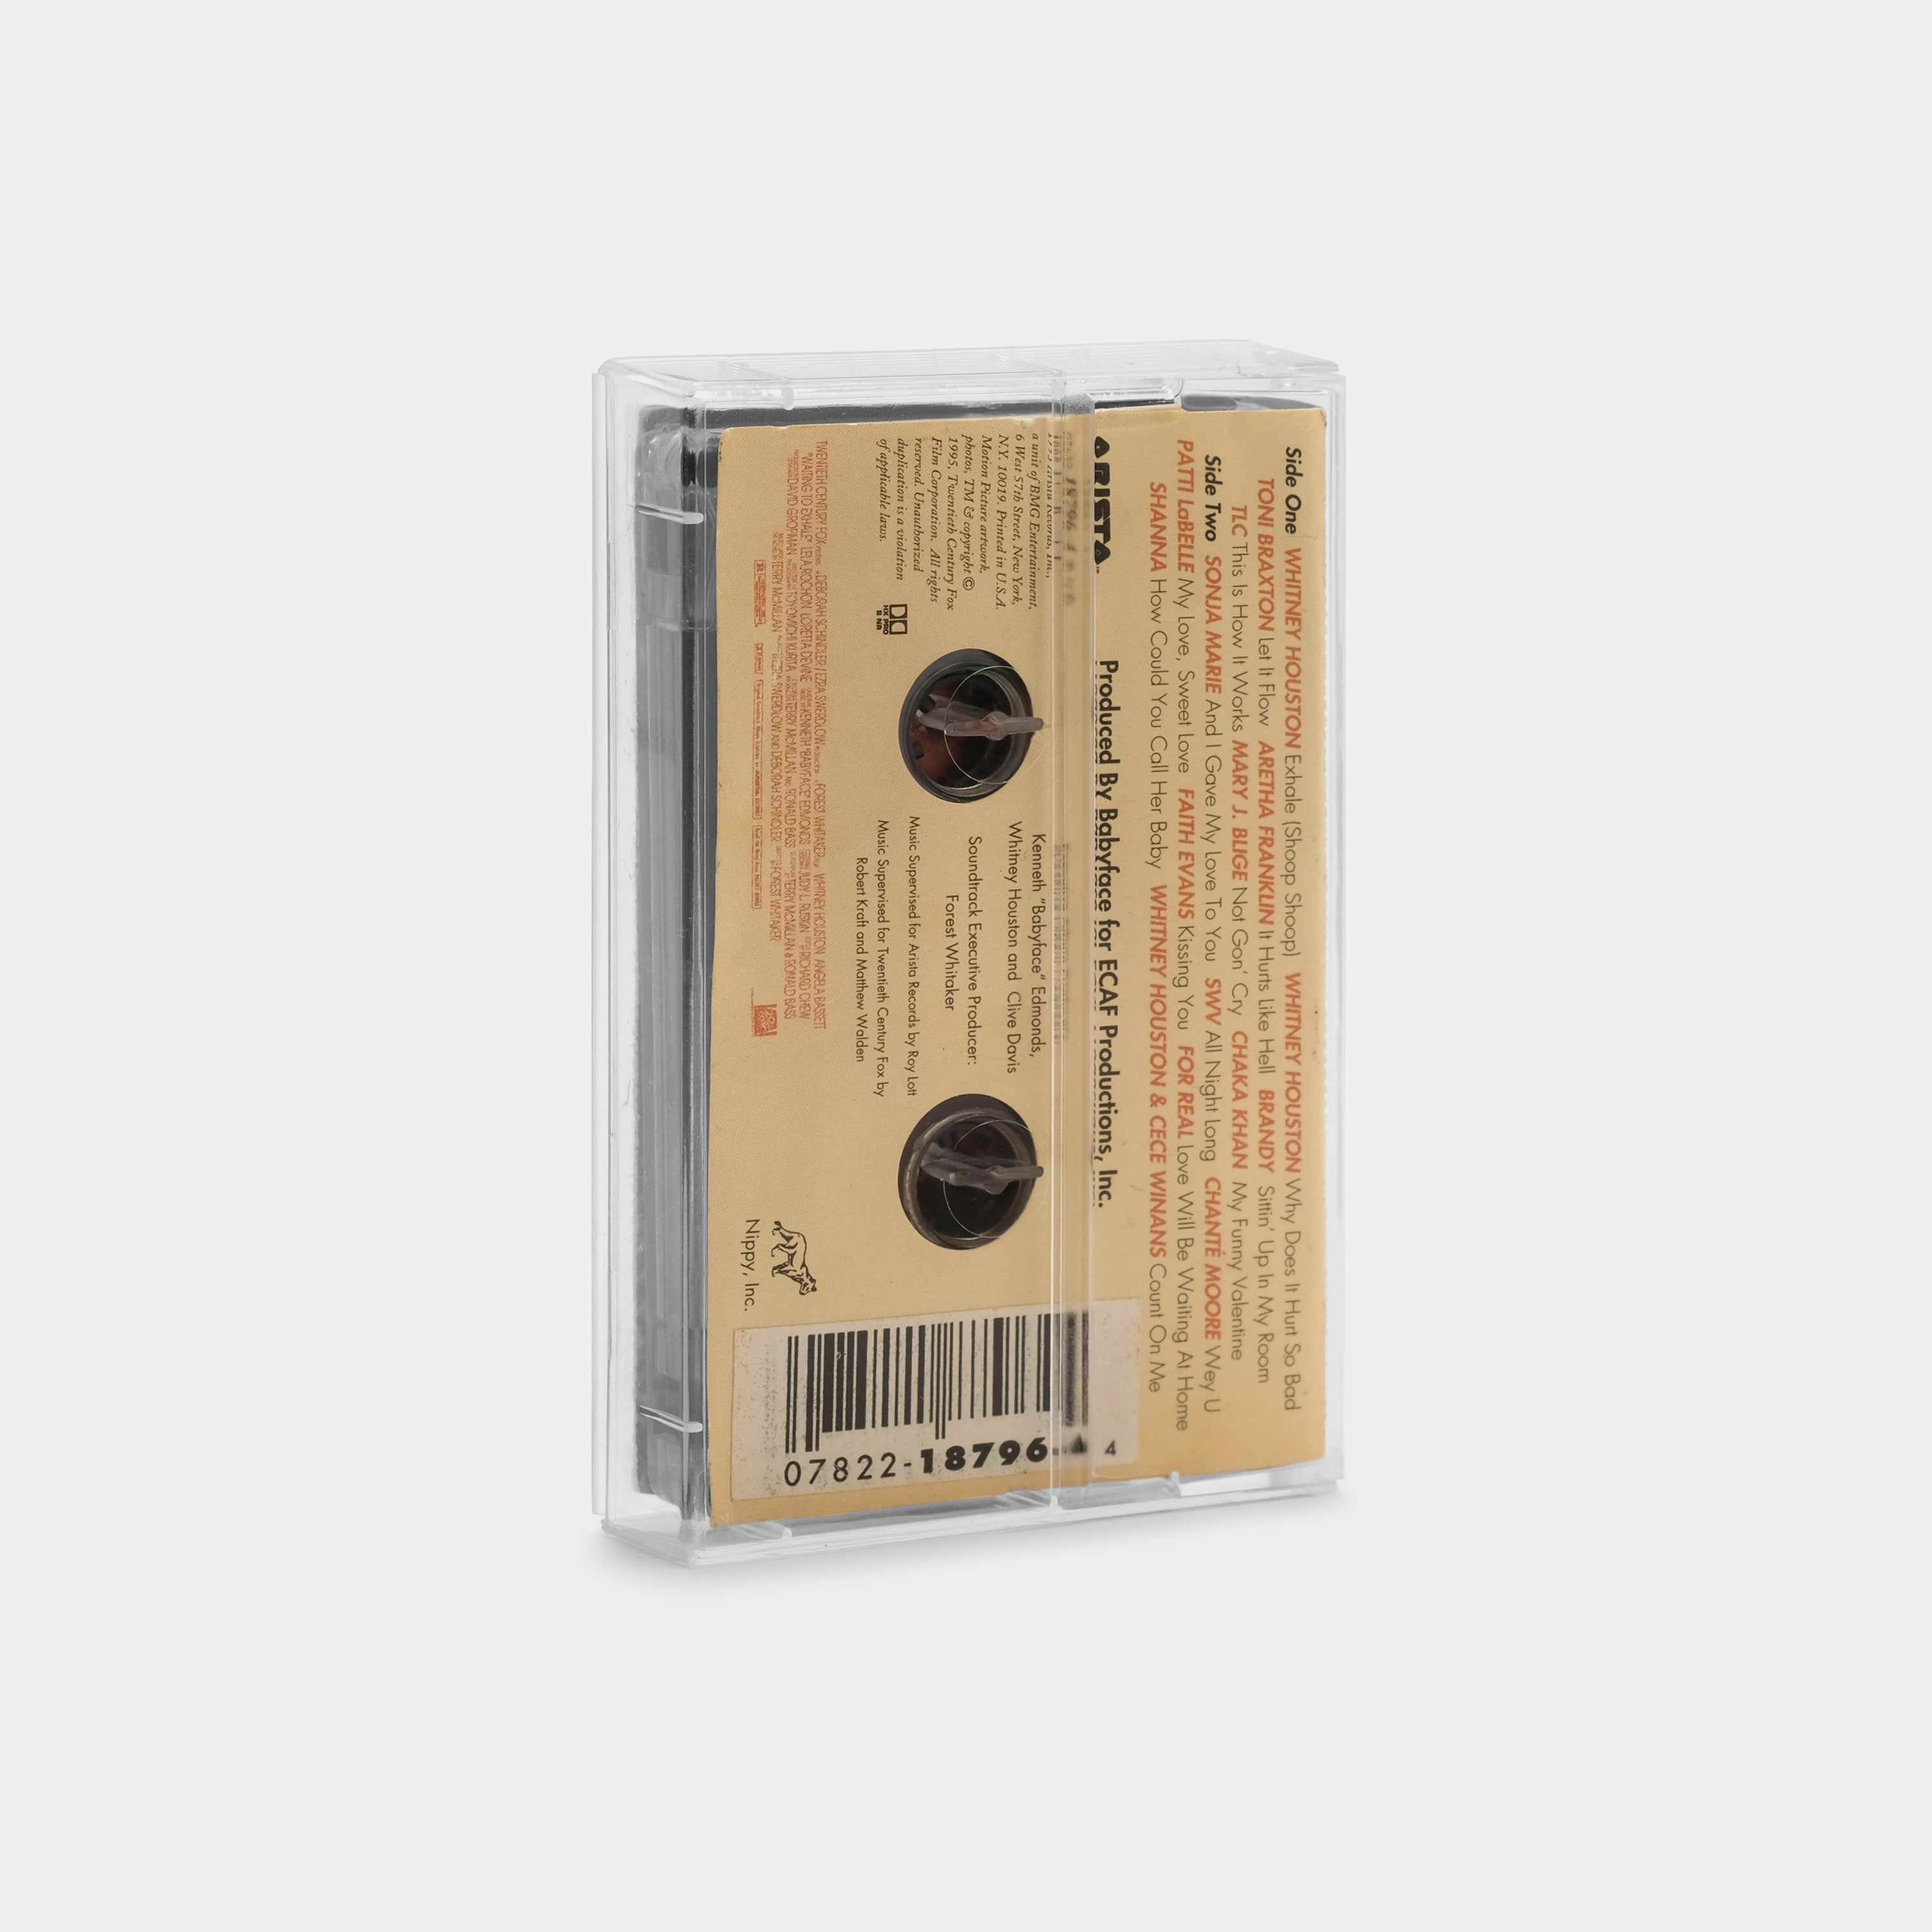 Waiting to Exhale (Original Soundtrack Album) Cassette Tape